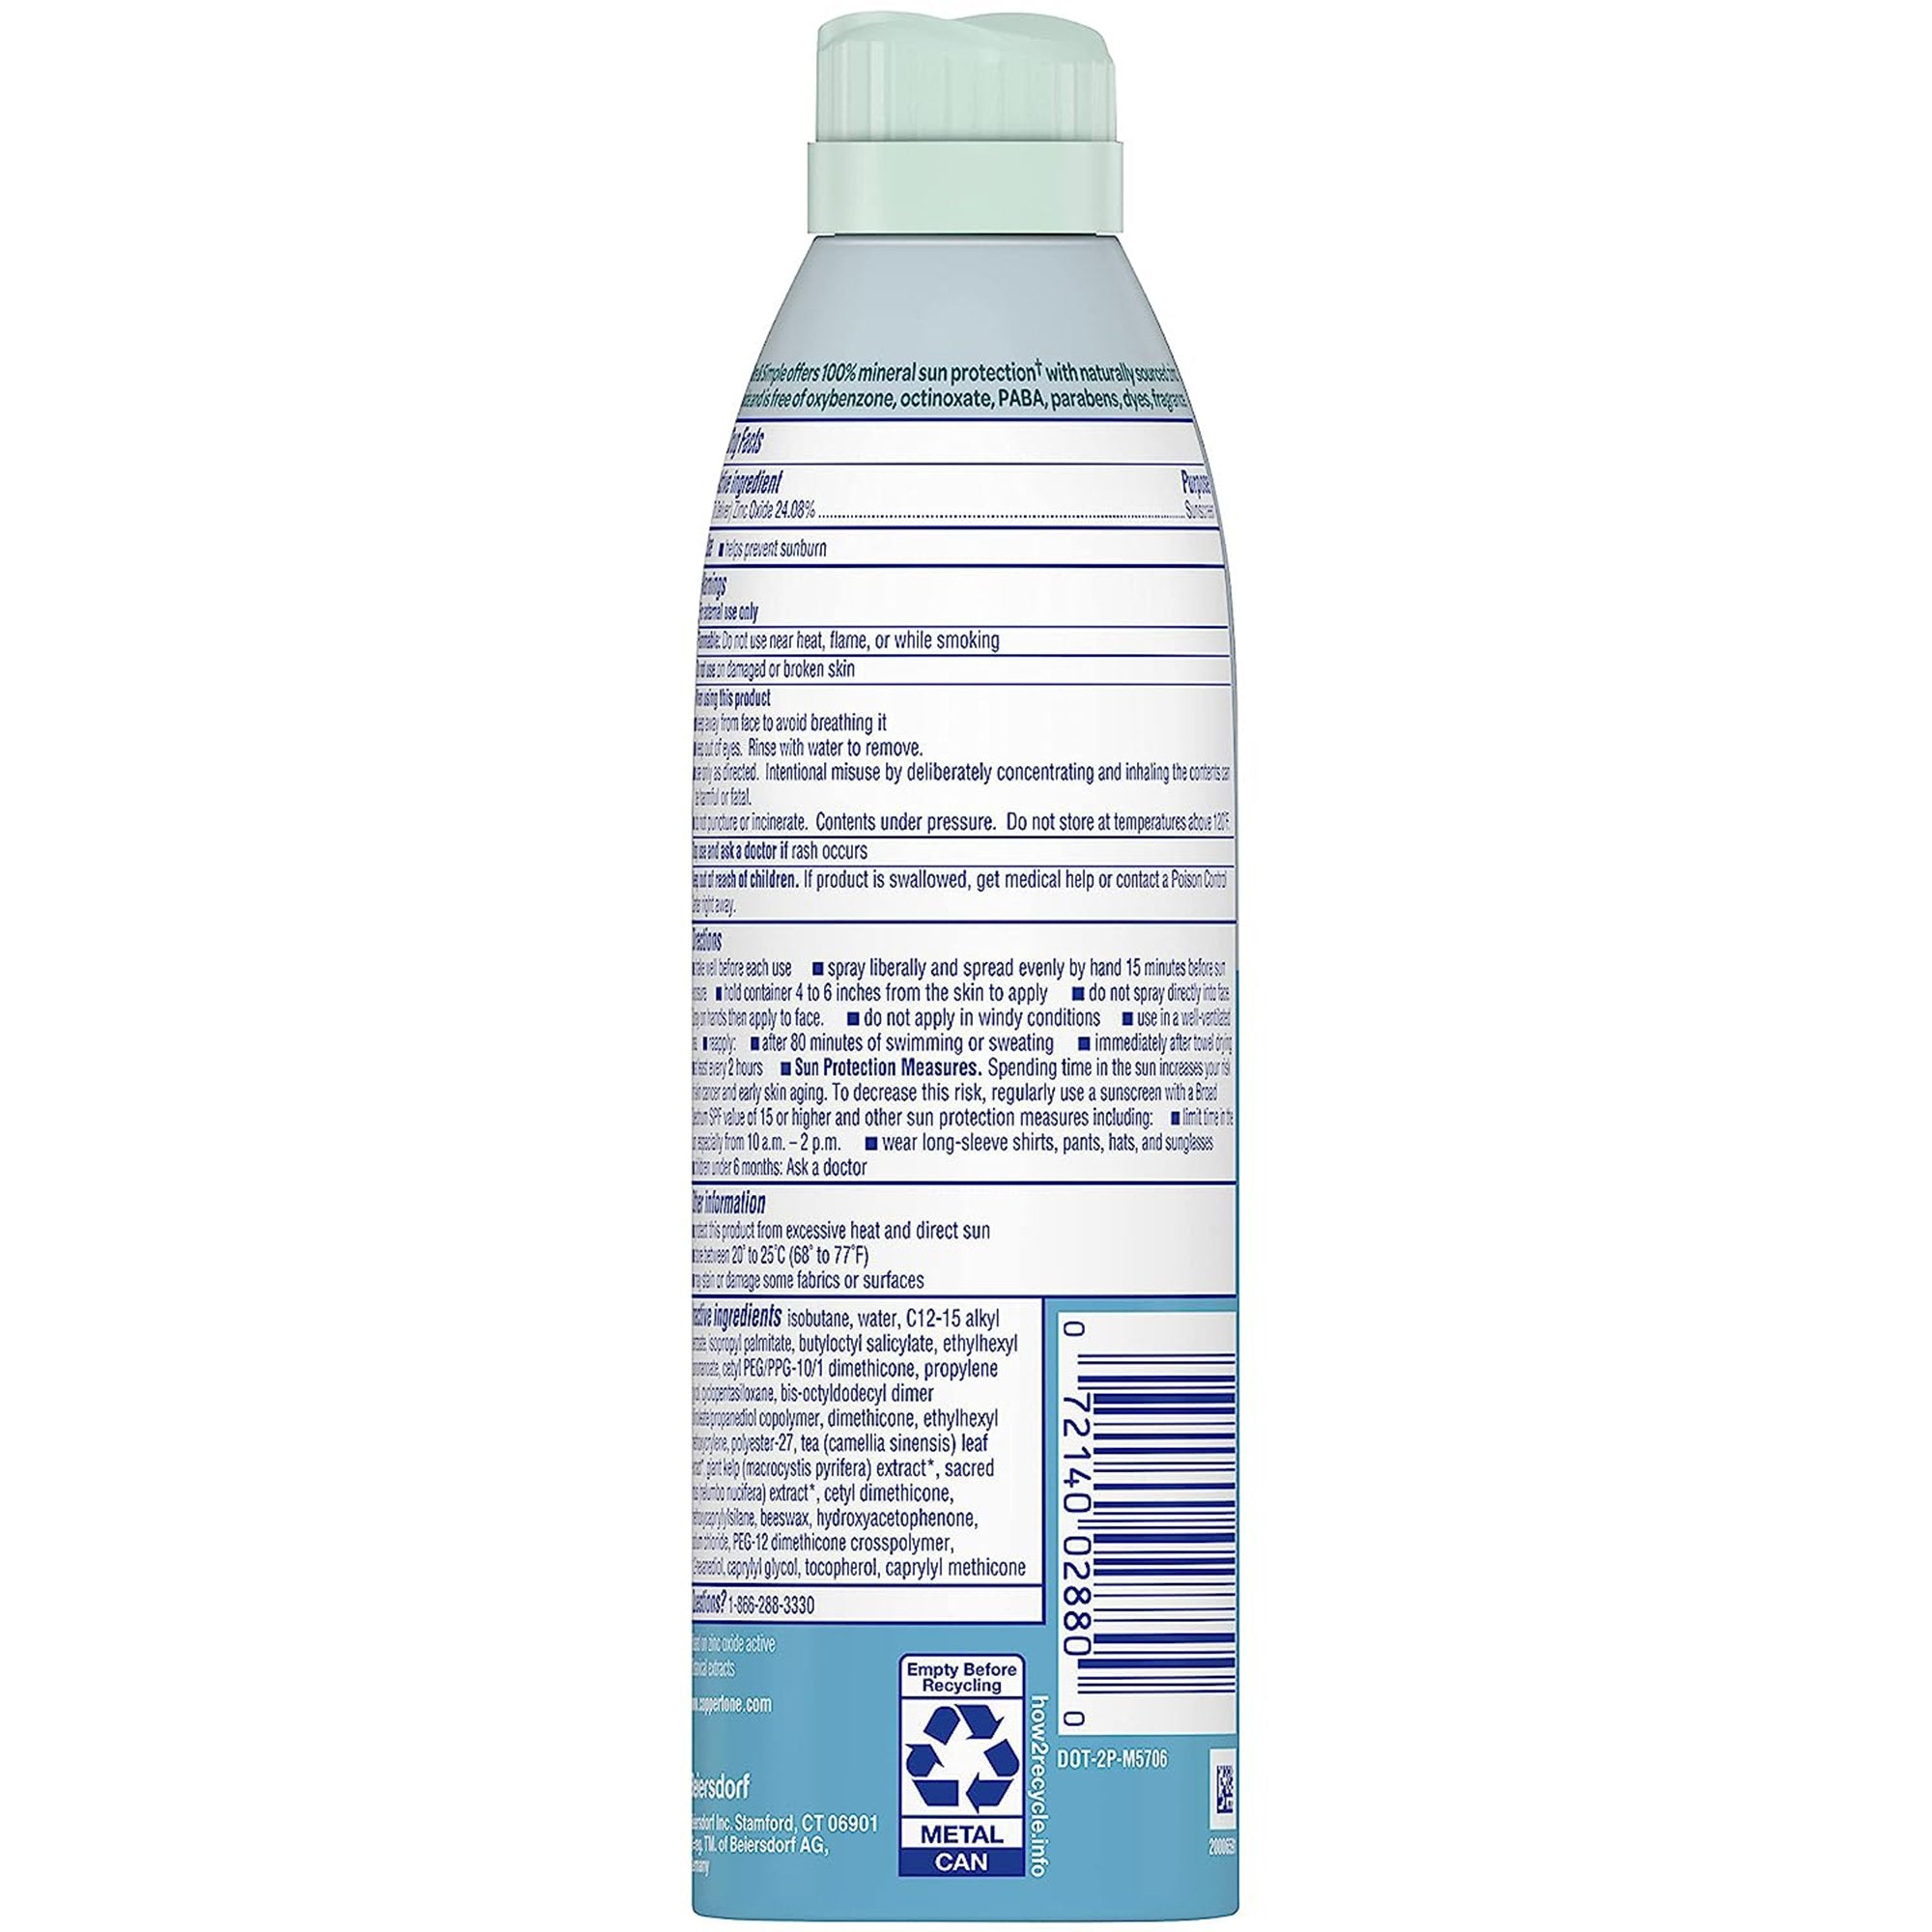 Coppertone® Pure and Simple SPF 50 Mineral Sunscreen Spray, 5 oz. (1 Unit)